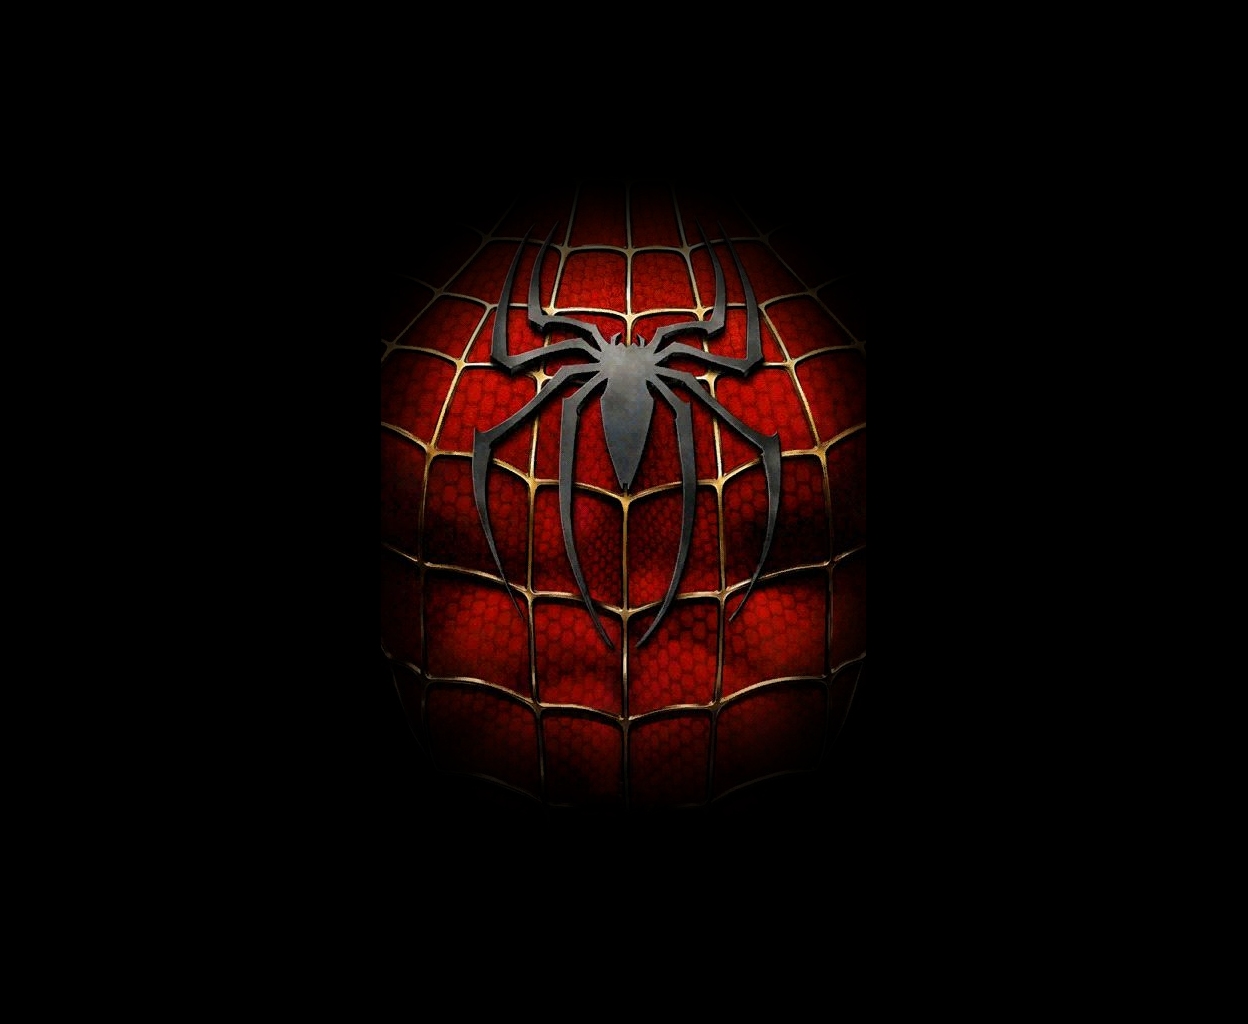 Spiderman 3